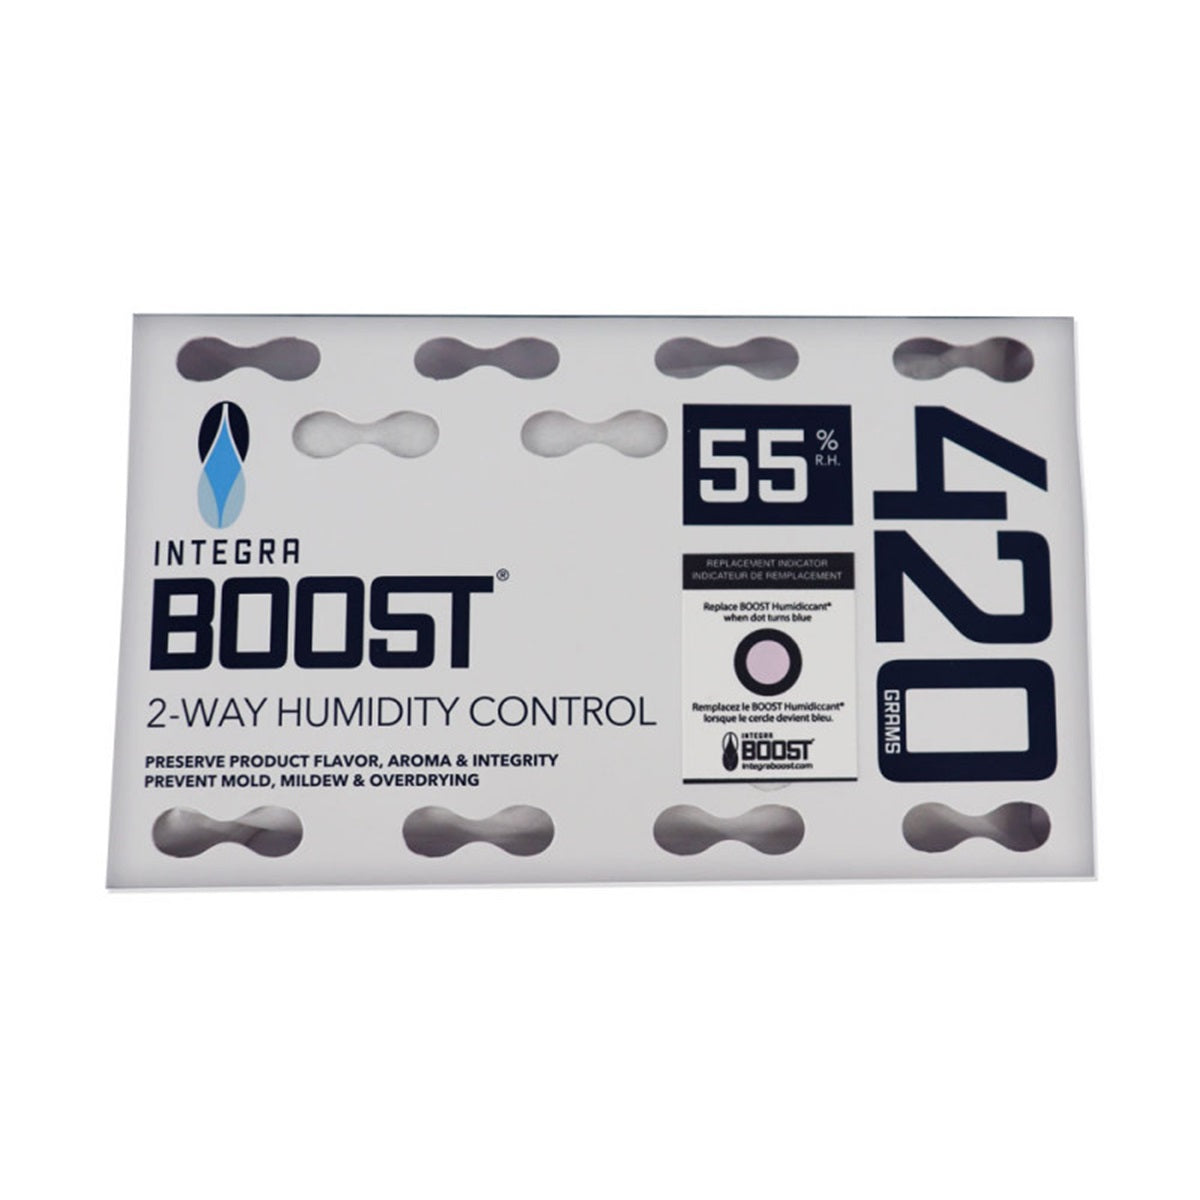 Sachet de controle de l'humidité Integra Boost 420 grammes - 55%